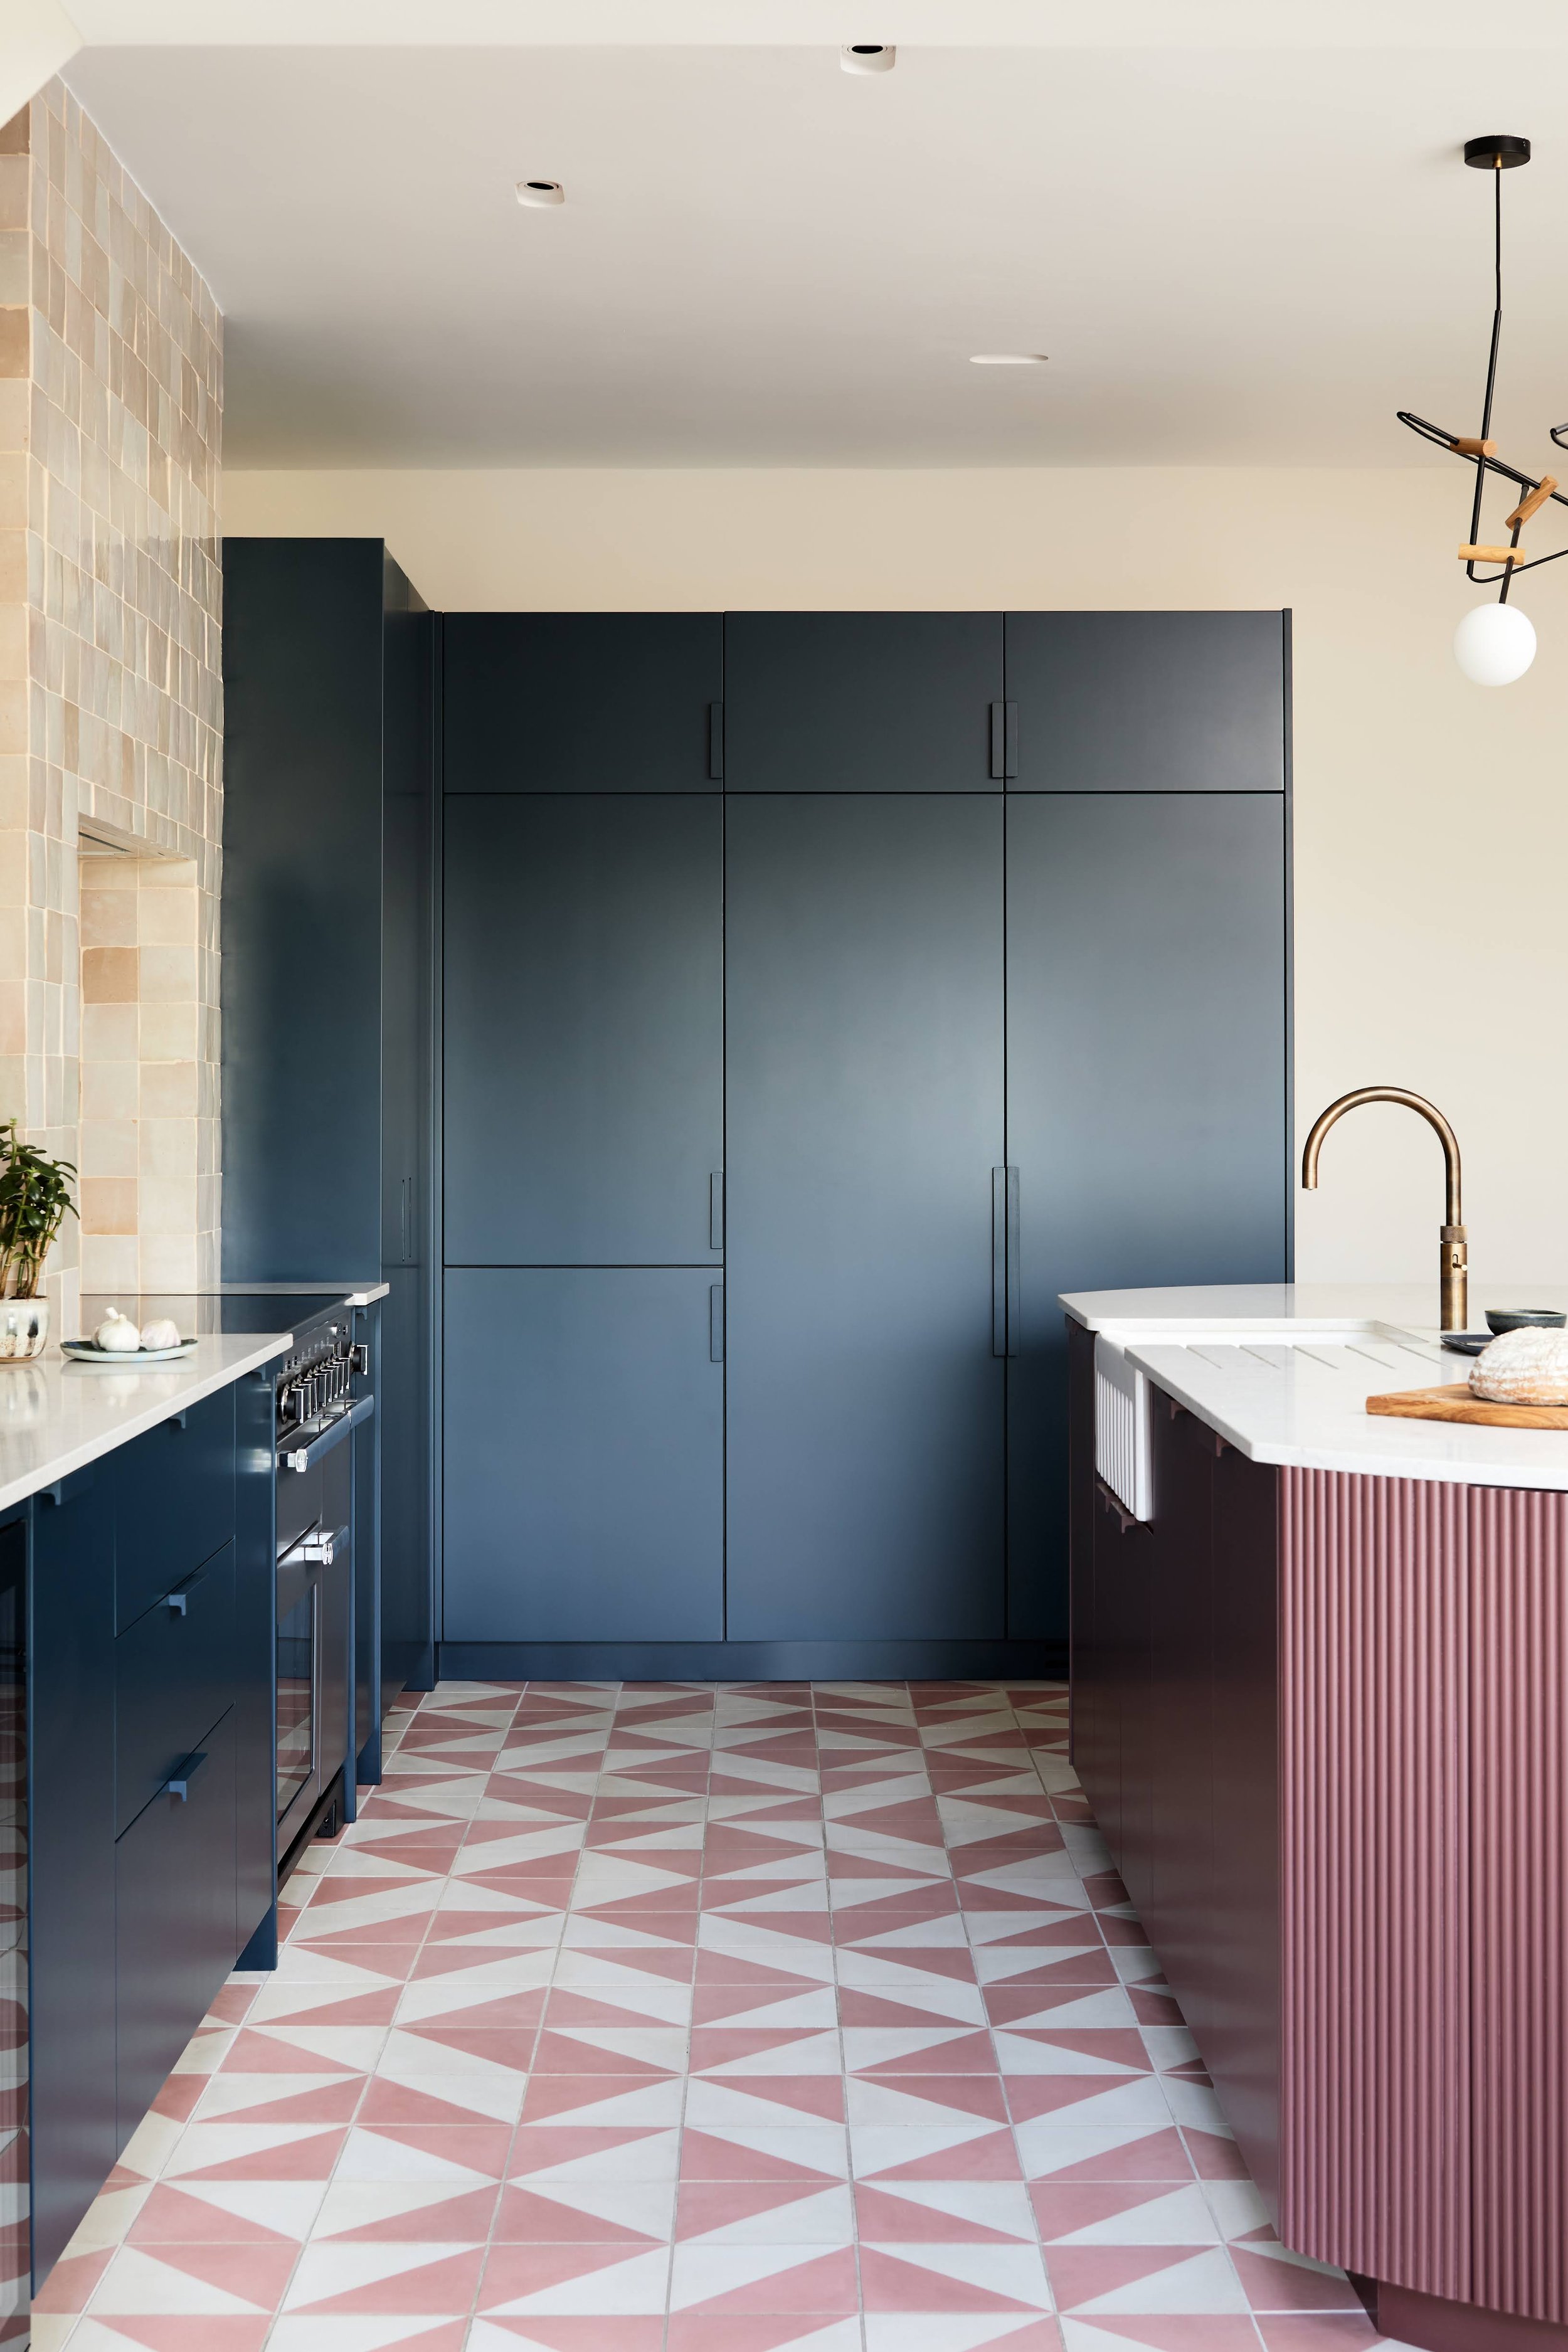 Kitchen with pink floor tiles and dark cupboards